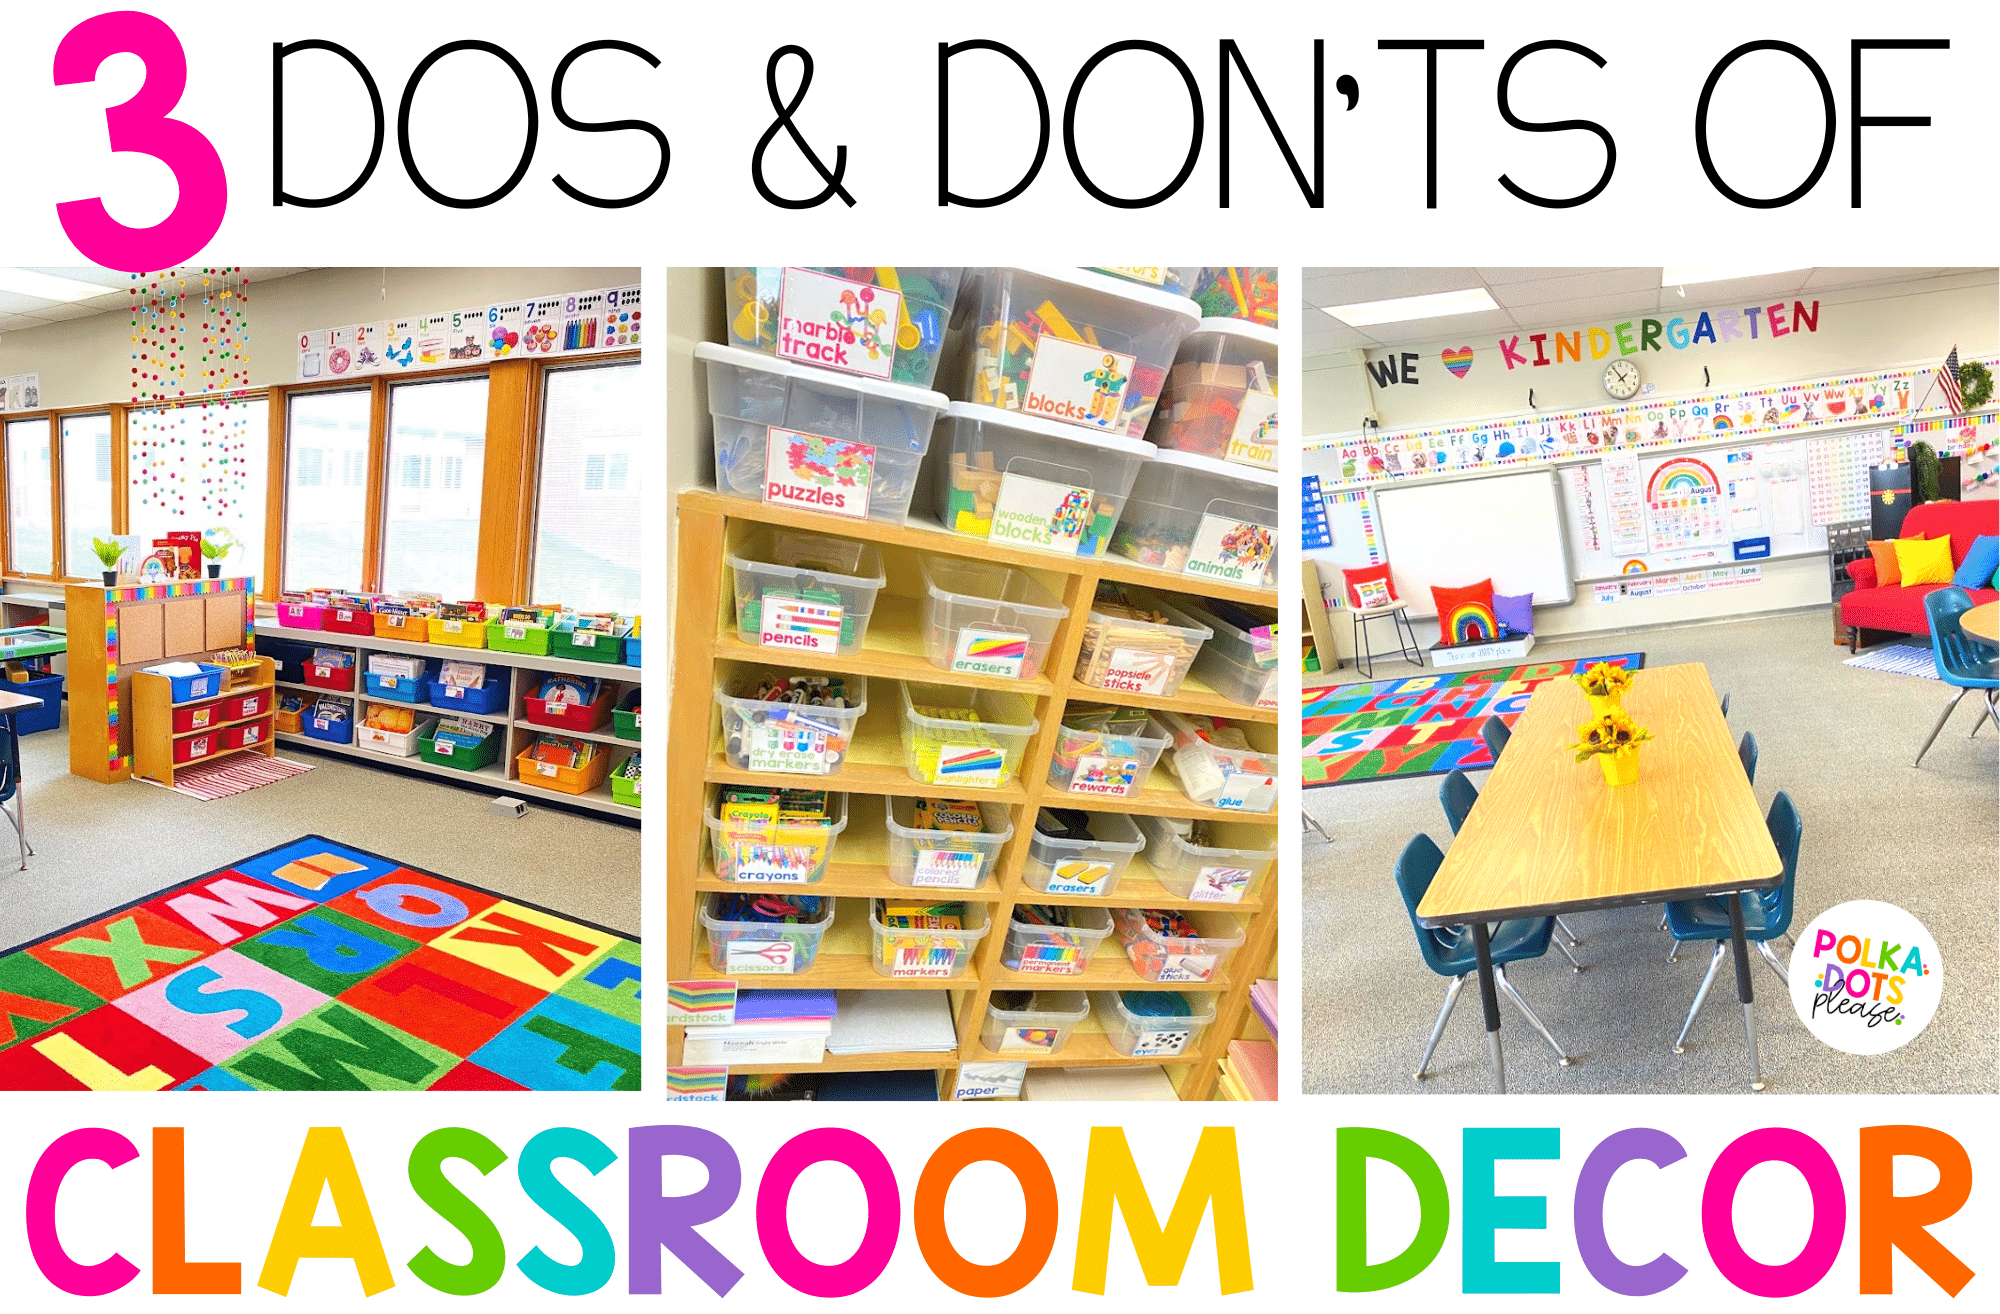 3 Dos and Don'ts of Classroom Decor - Polka Dots Please